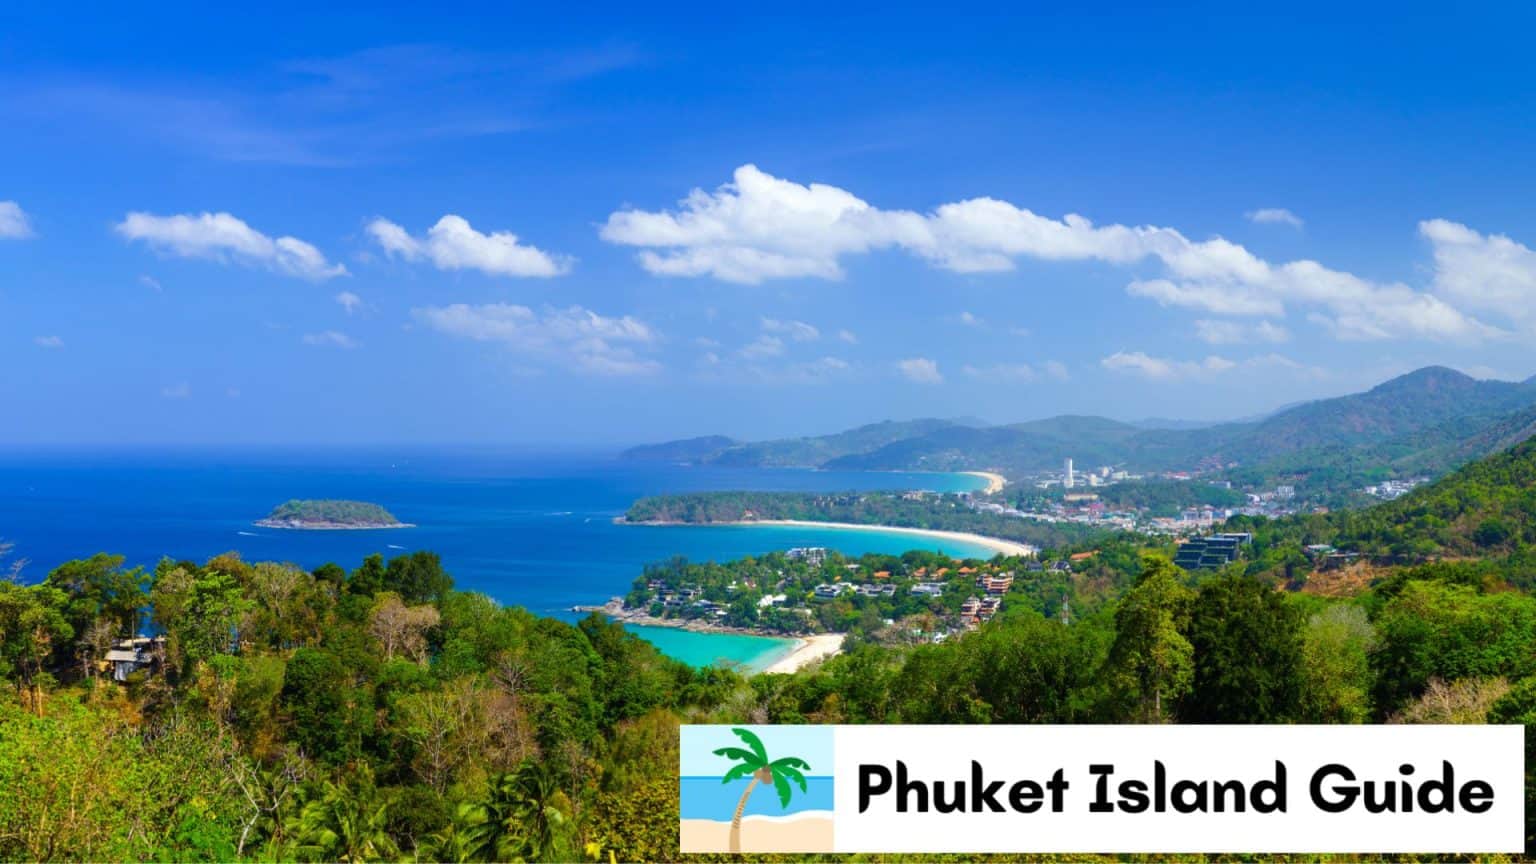 Phuket Island Guide Main Image